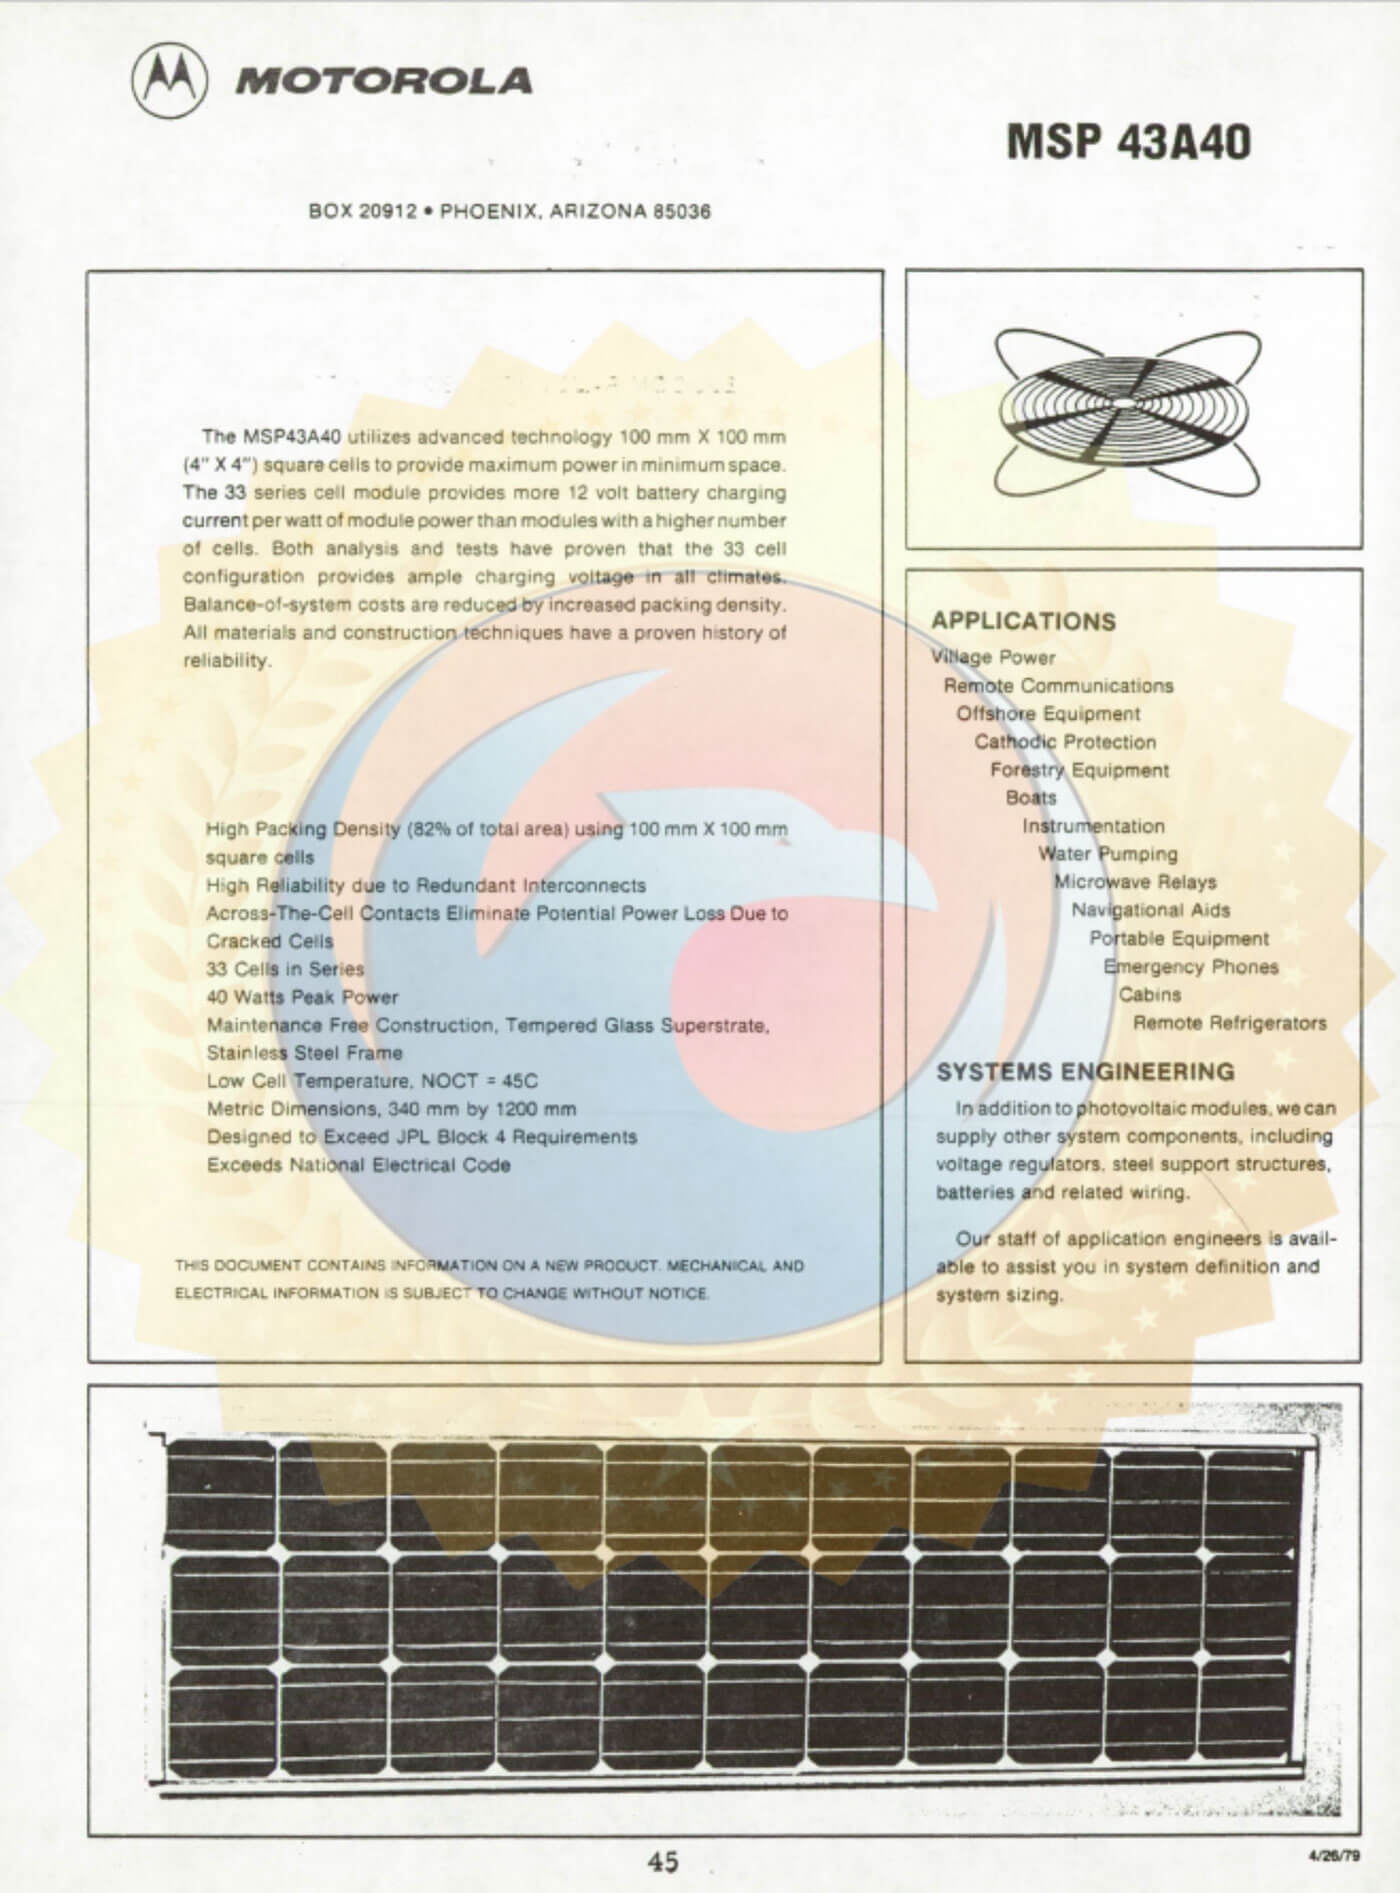 PEP-Solar—Motorola-Image1—-02-15-19